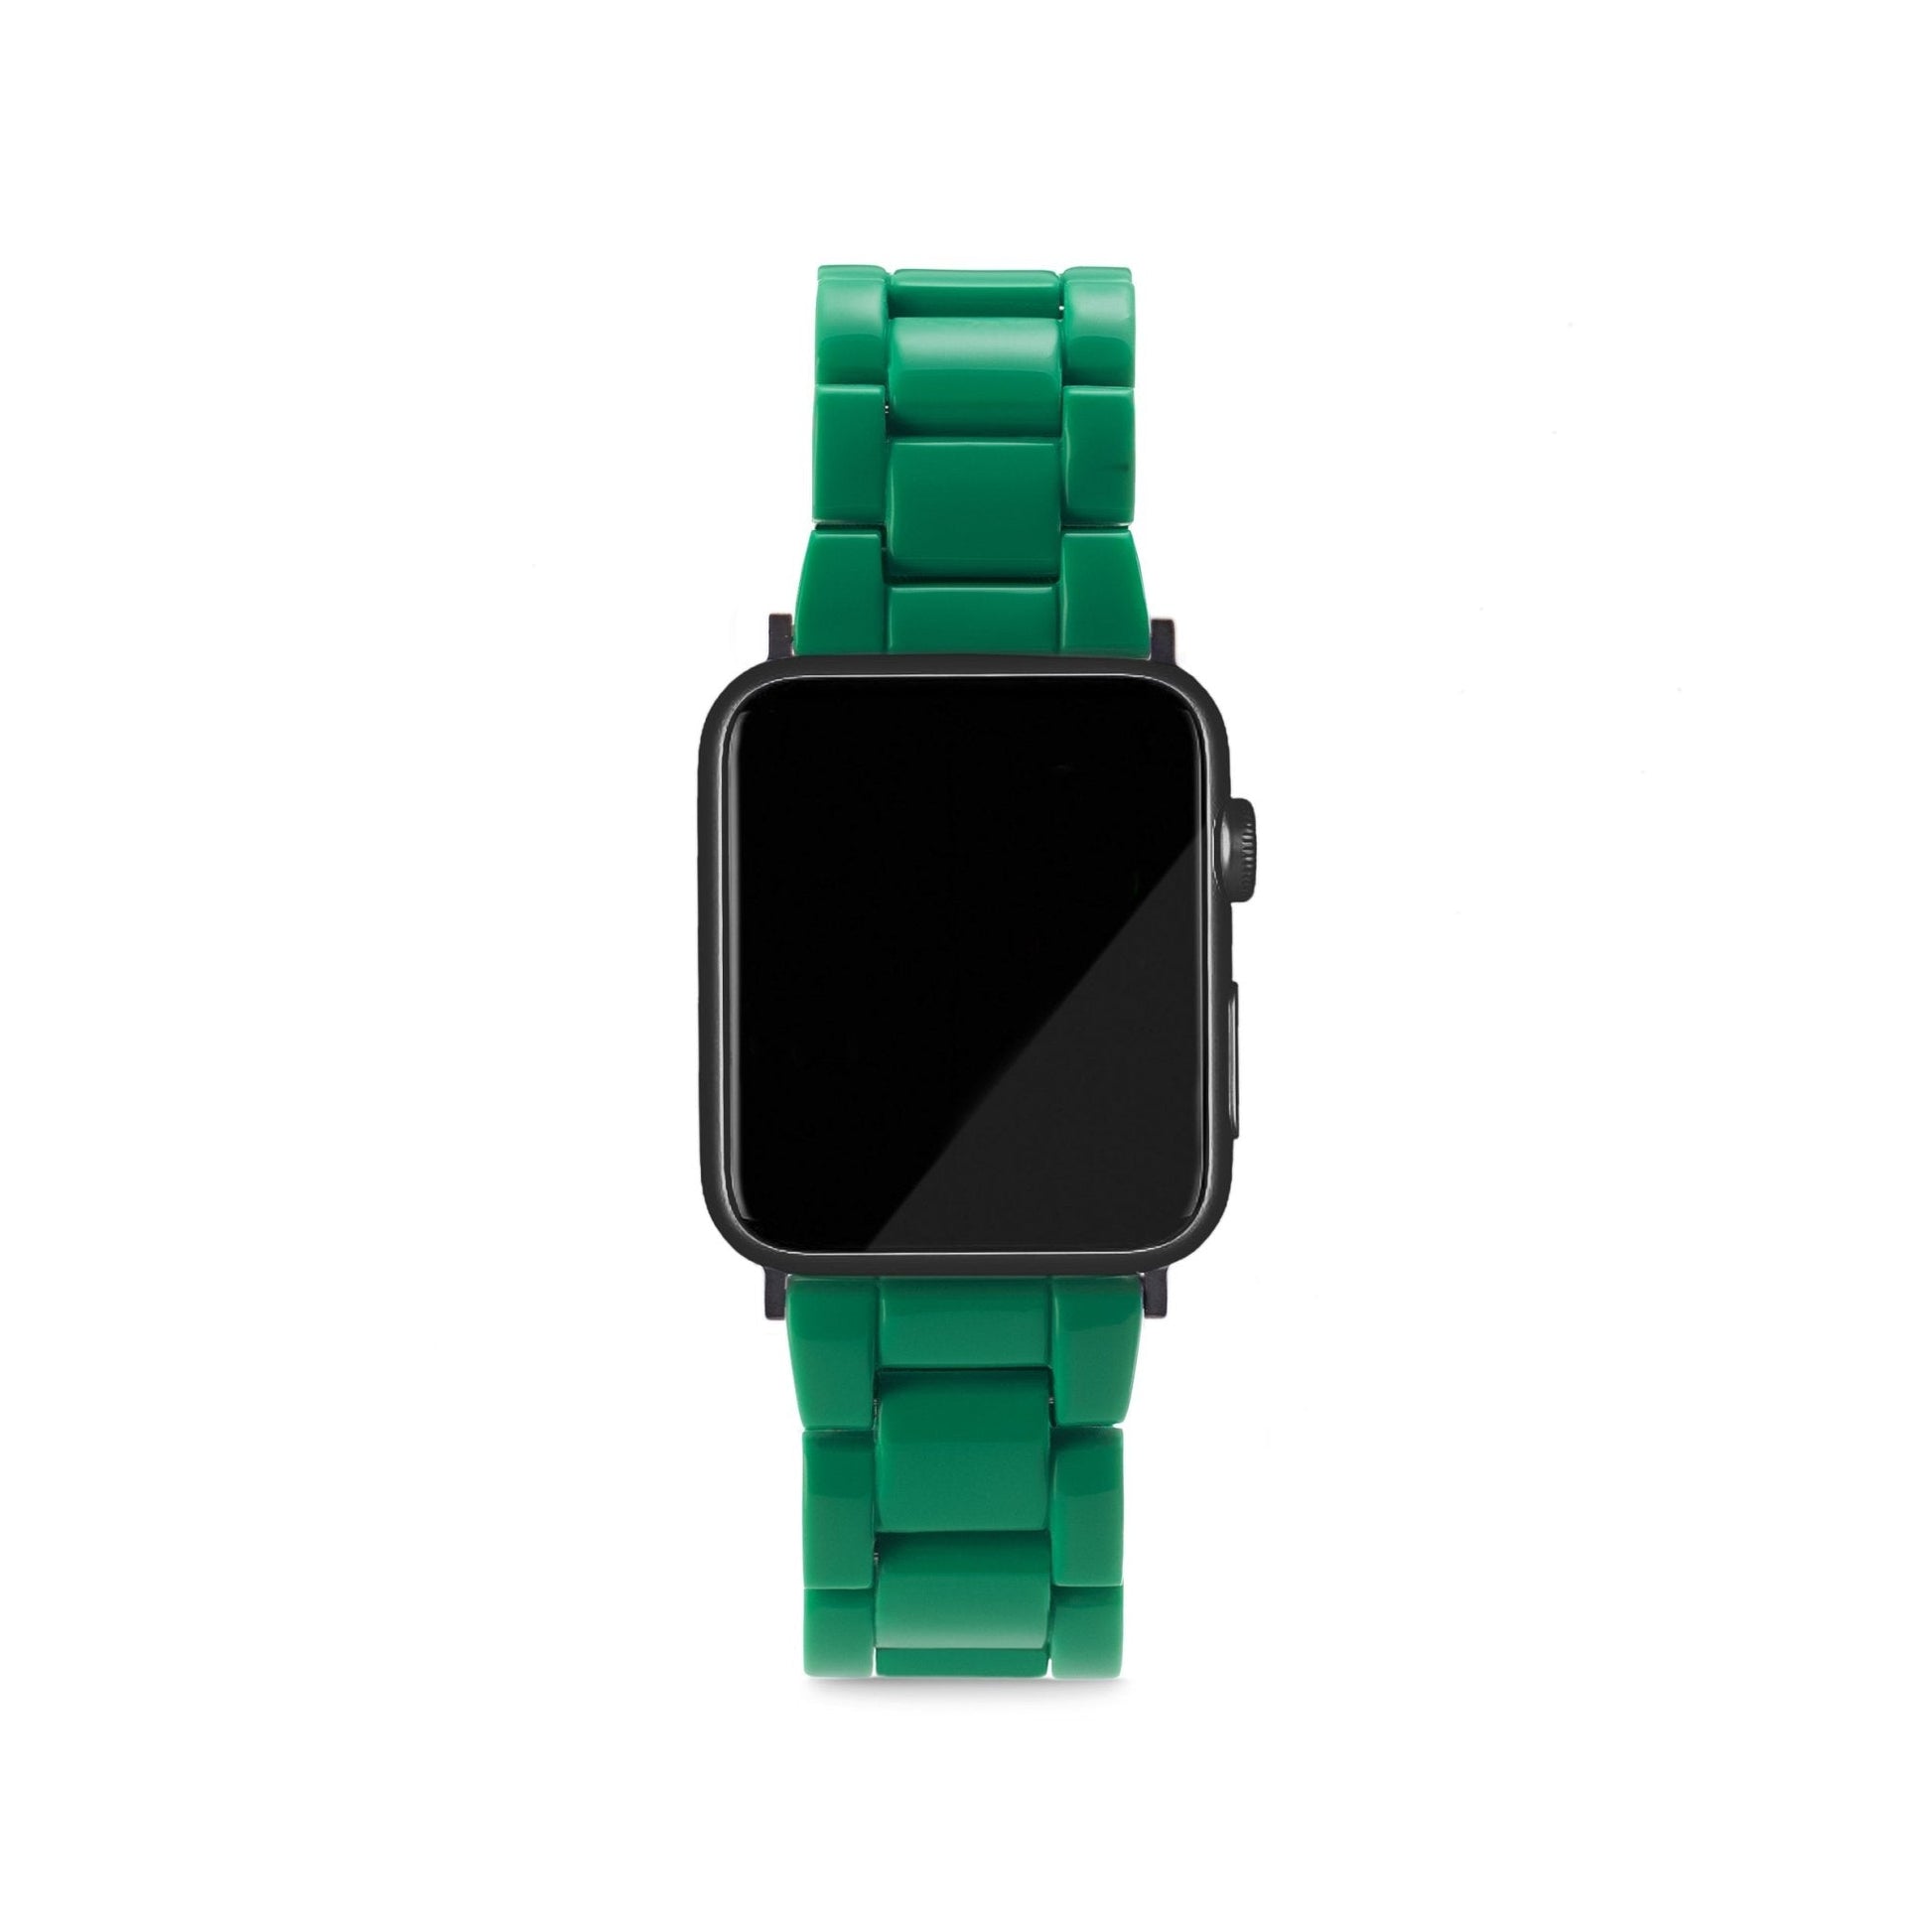 MACHETE Apple Watch Band in Bright Green